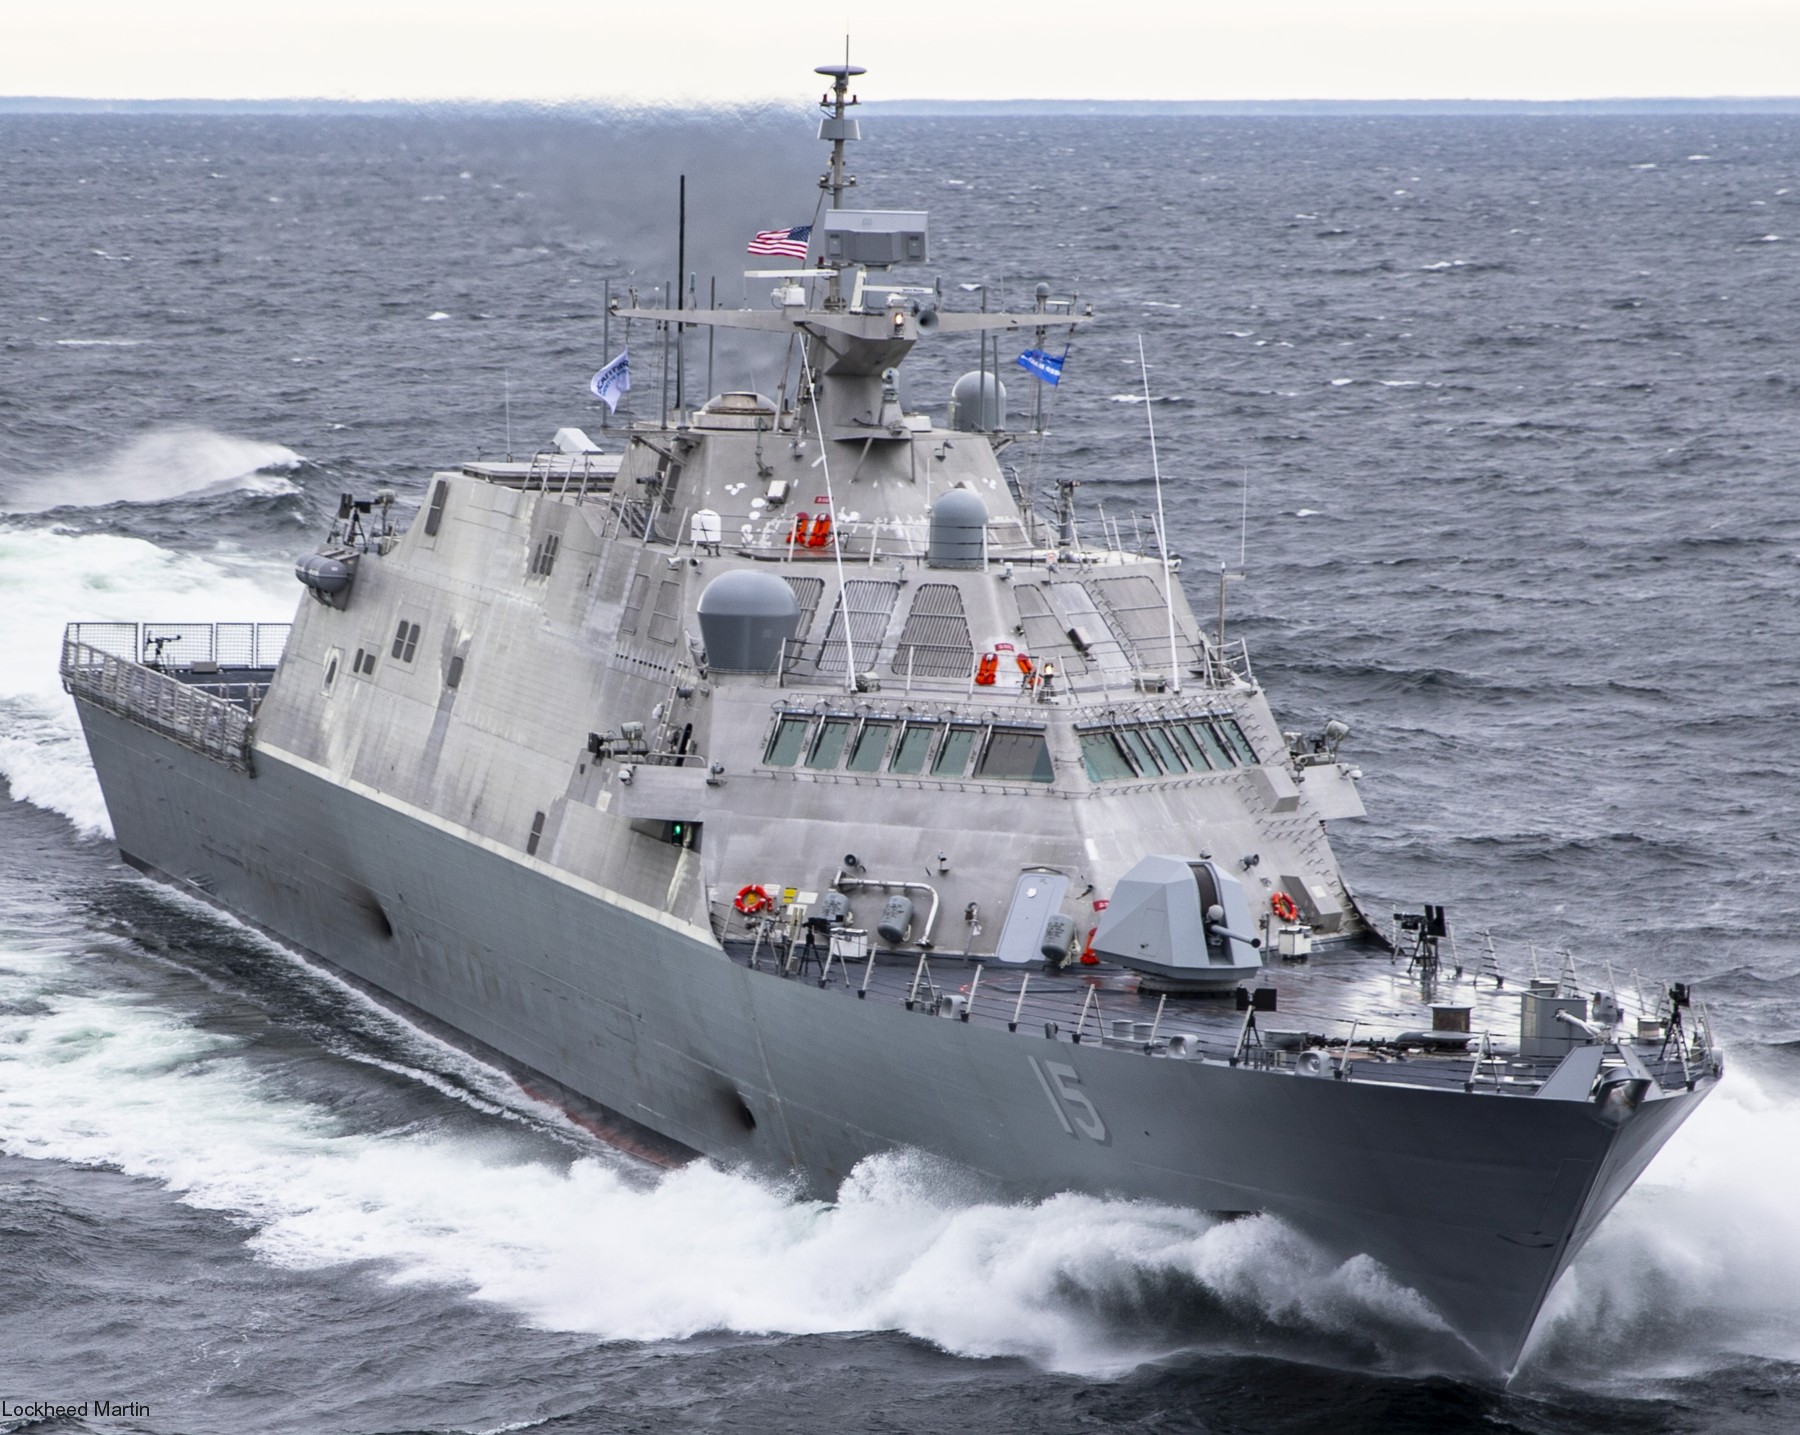 lcs-15 uss billings freedom class littoral combat ship us navy 37 acceptance trials lockheed martin